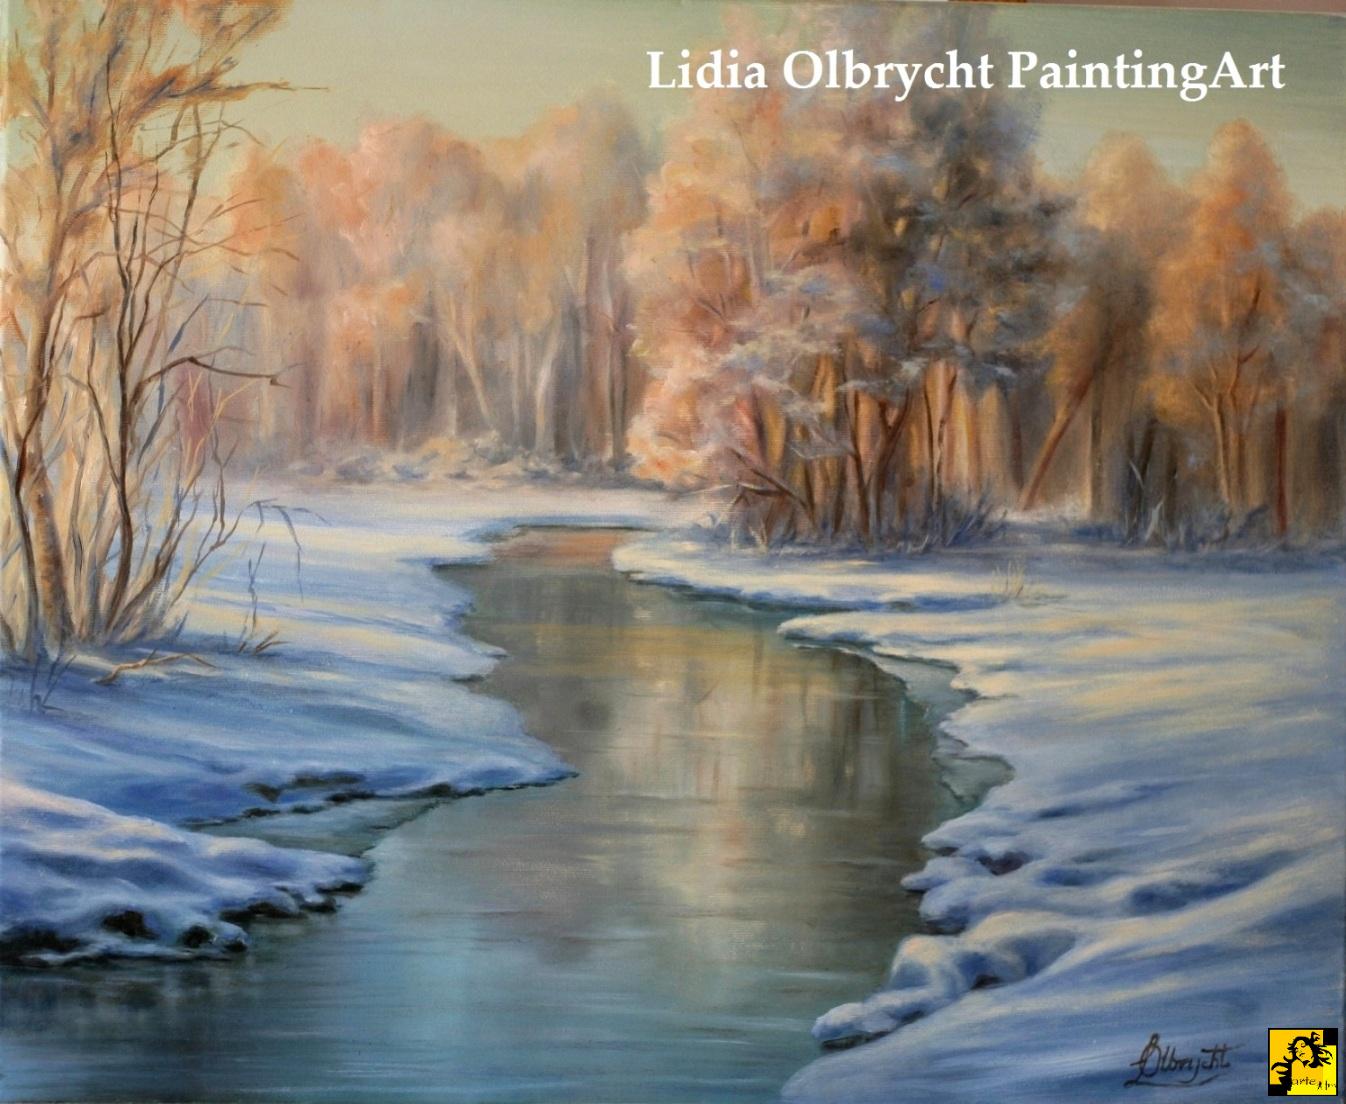 Lidia  ART Olbrycht: 